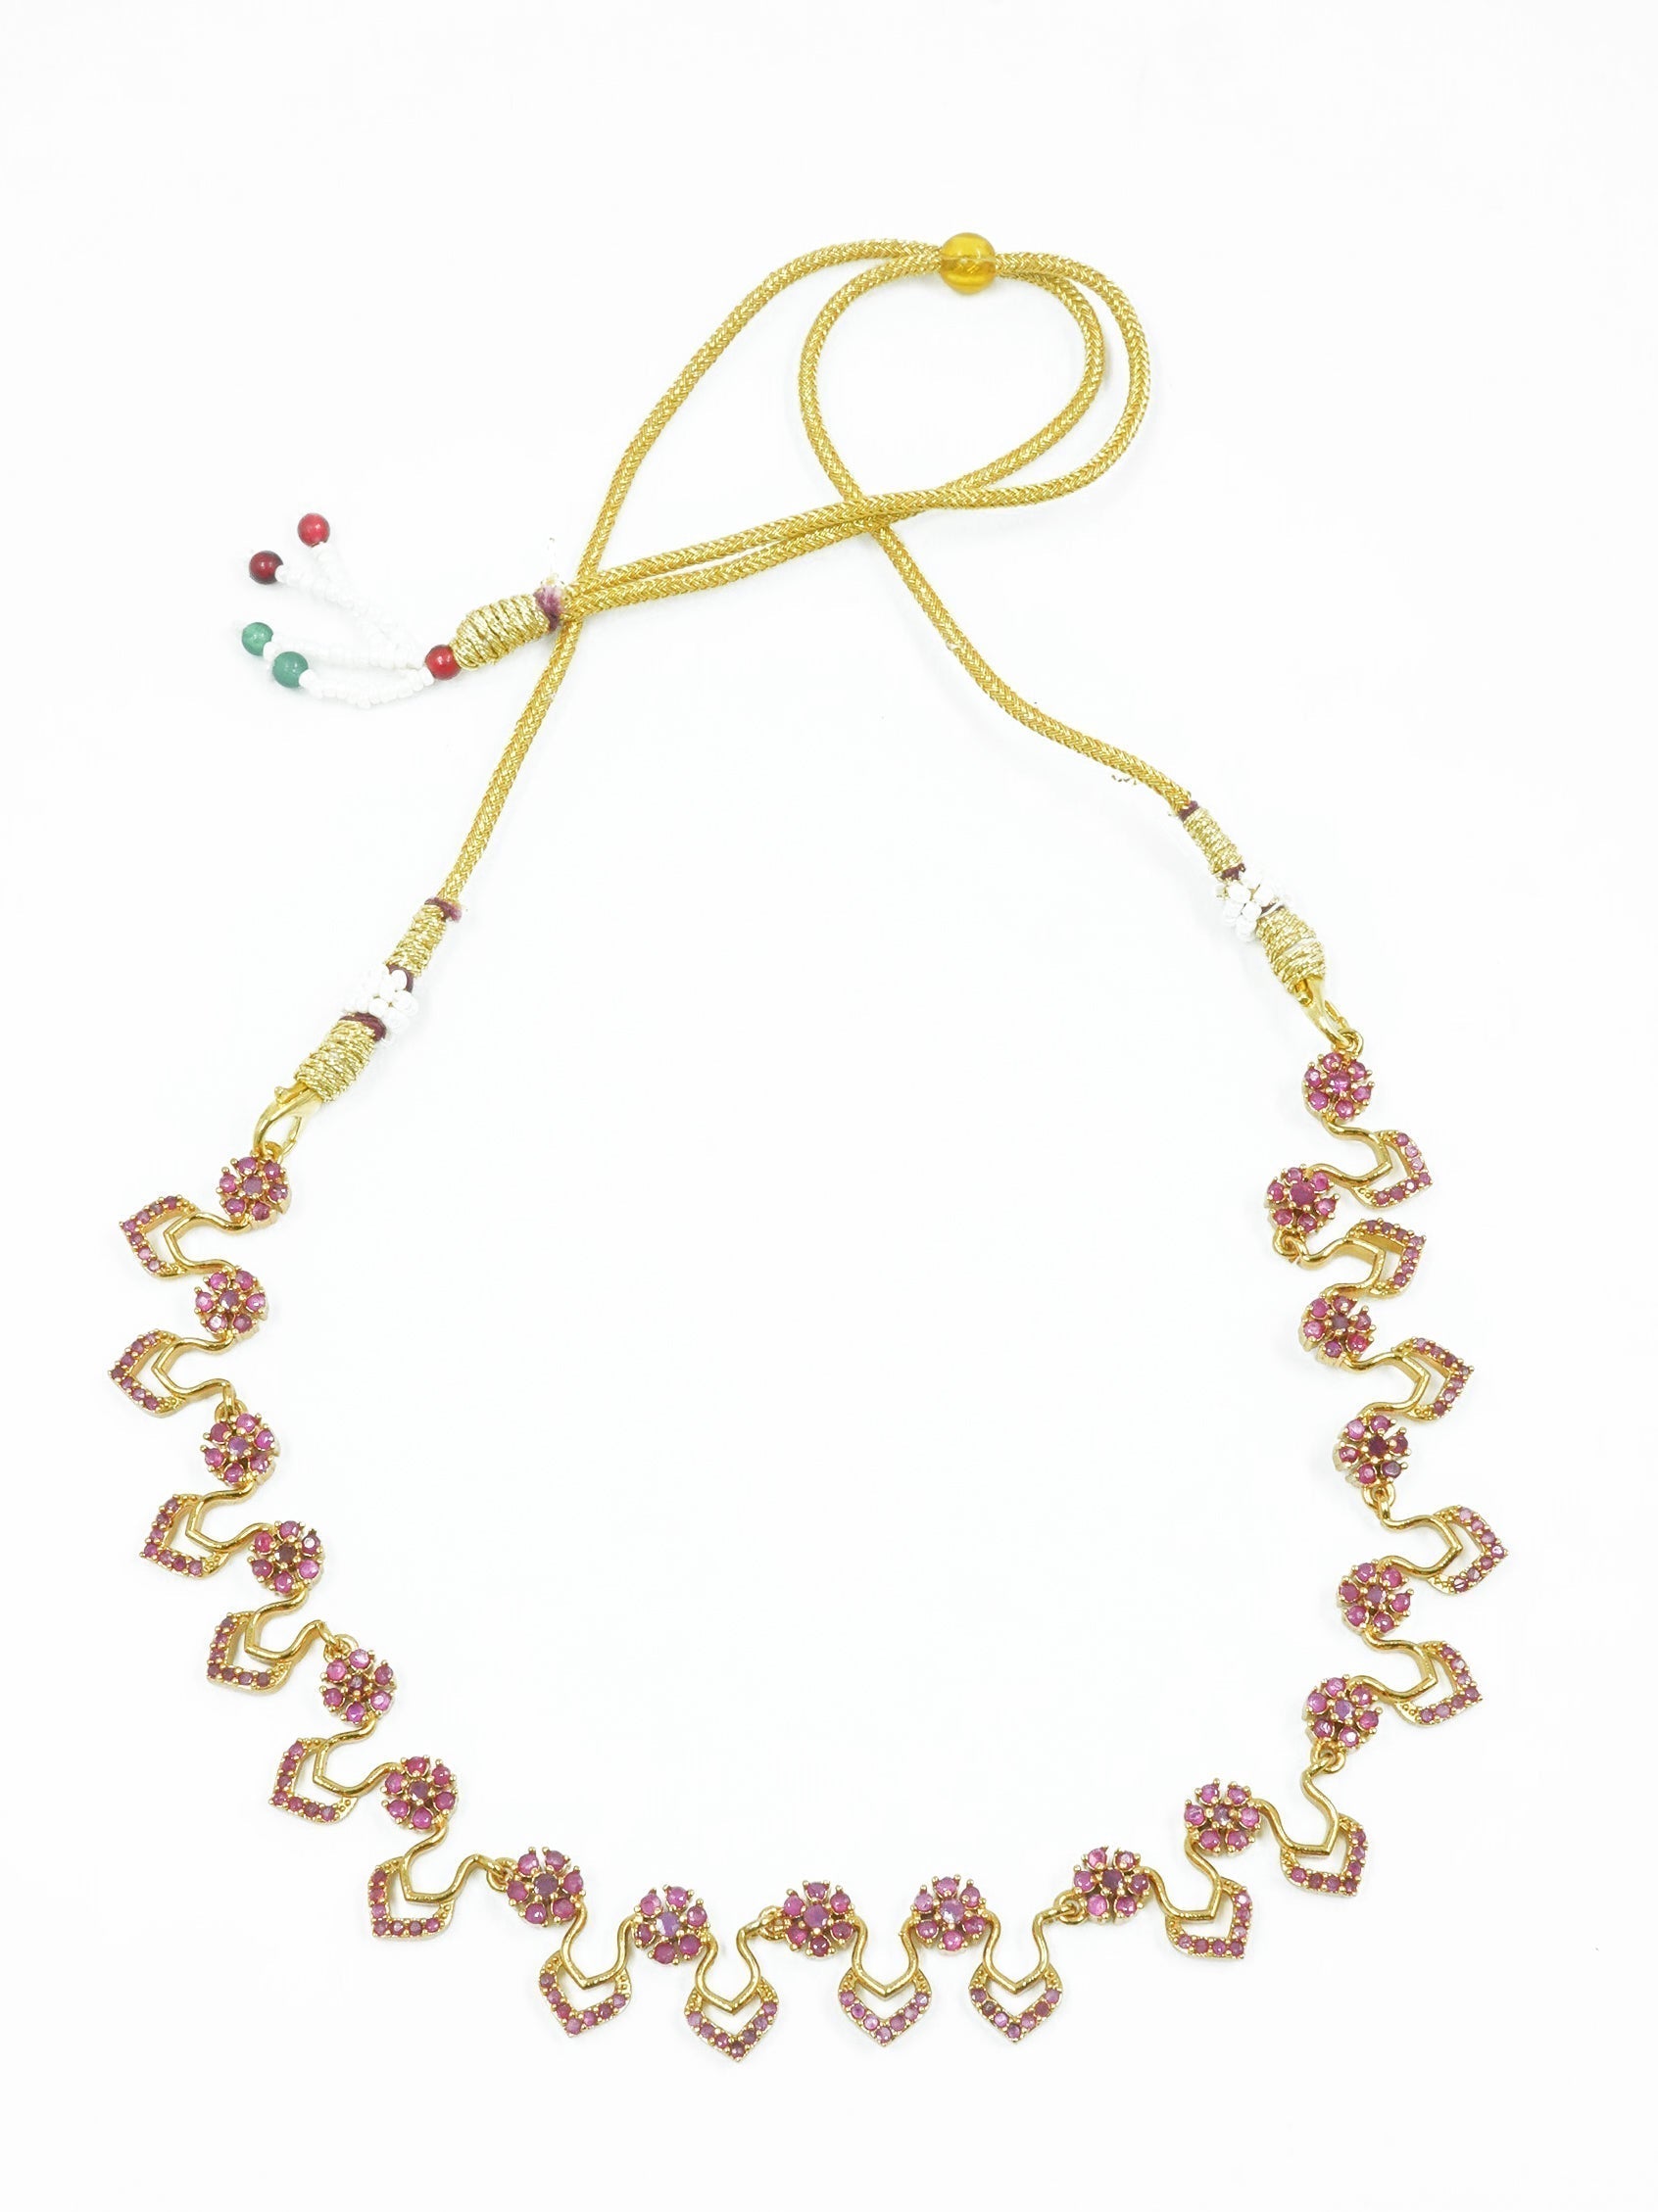 Premium white Gold plated Trending designs Short AD/zircon necklace set 12865N-1